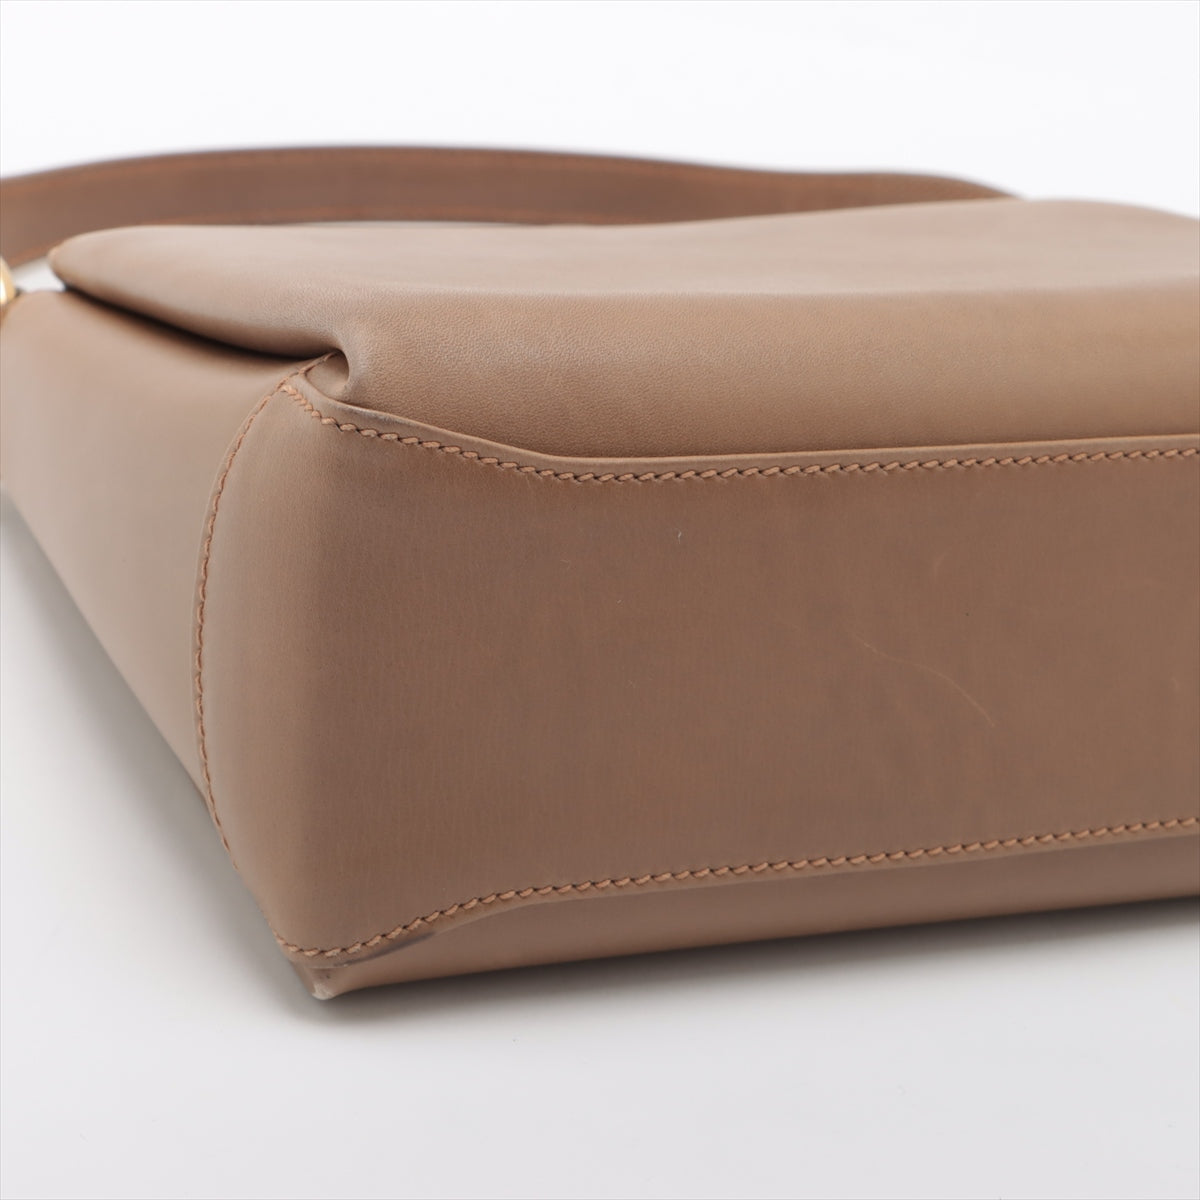 Gucci Turn-Lock Leather Handbag Brown